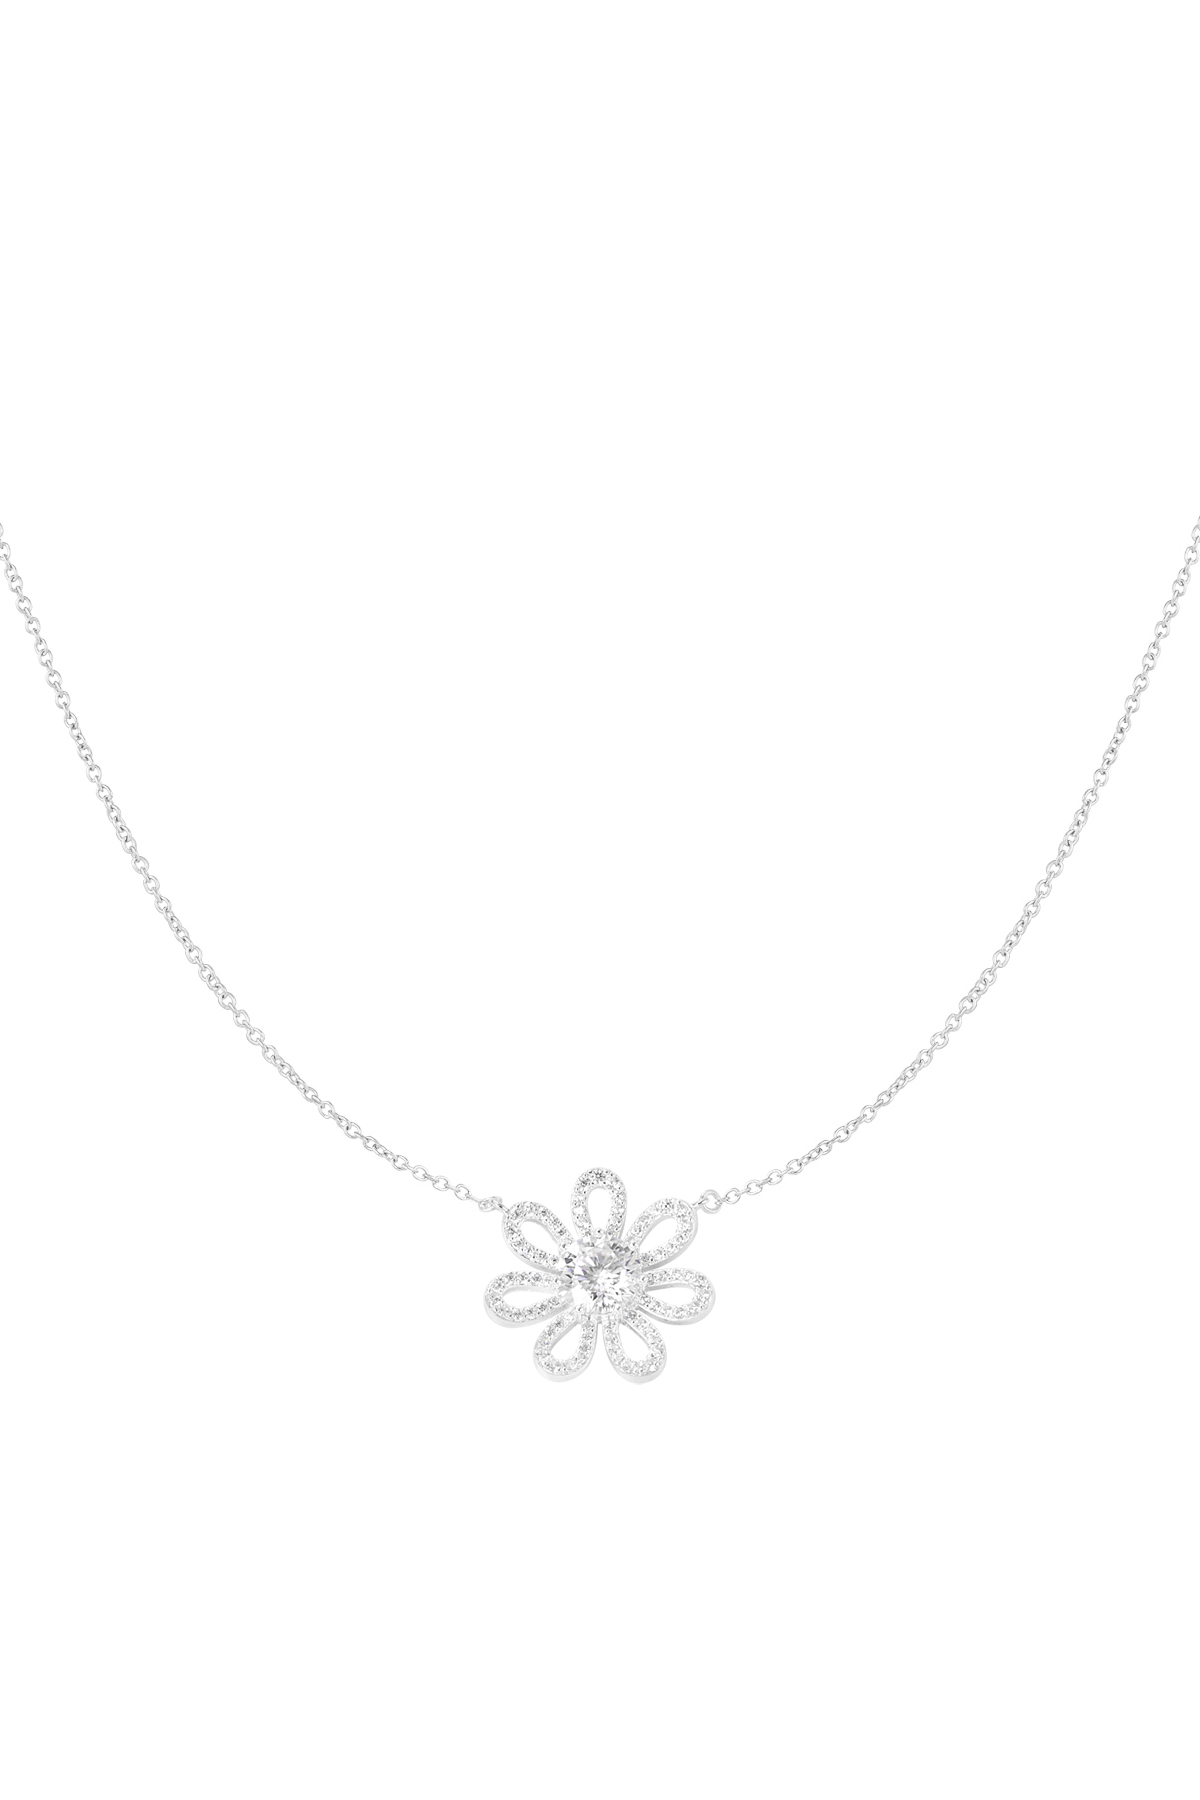 Necklace rhinestones flower - silver h5 